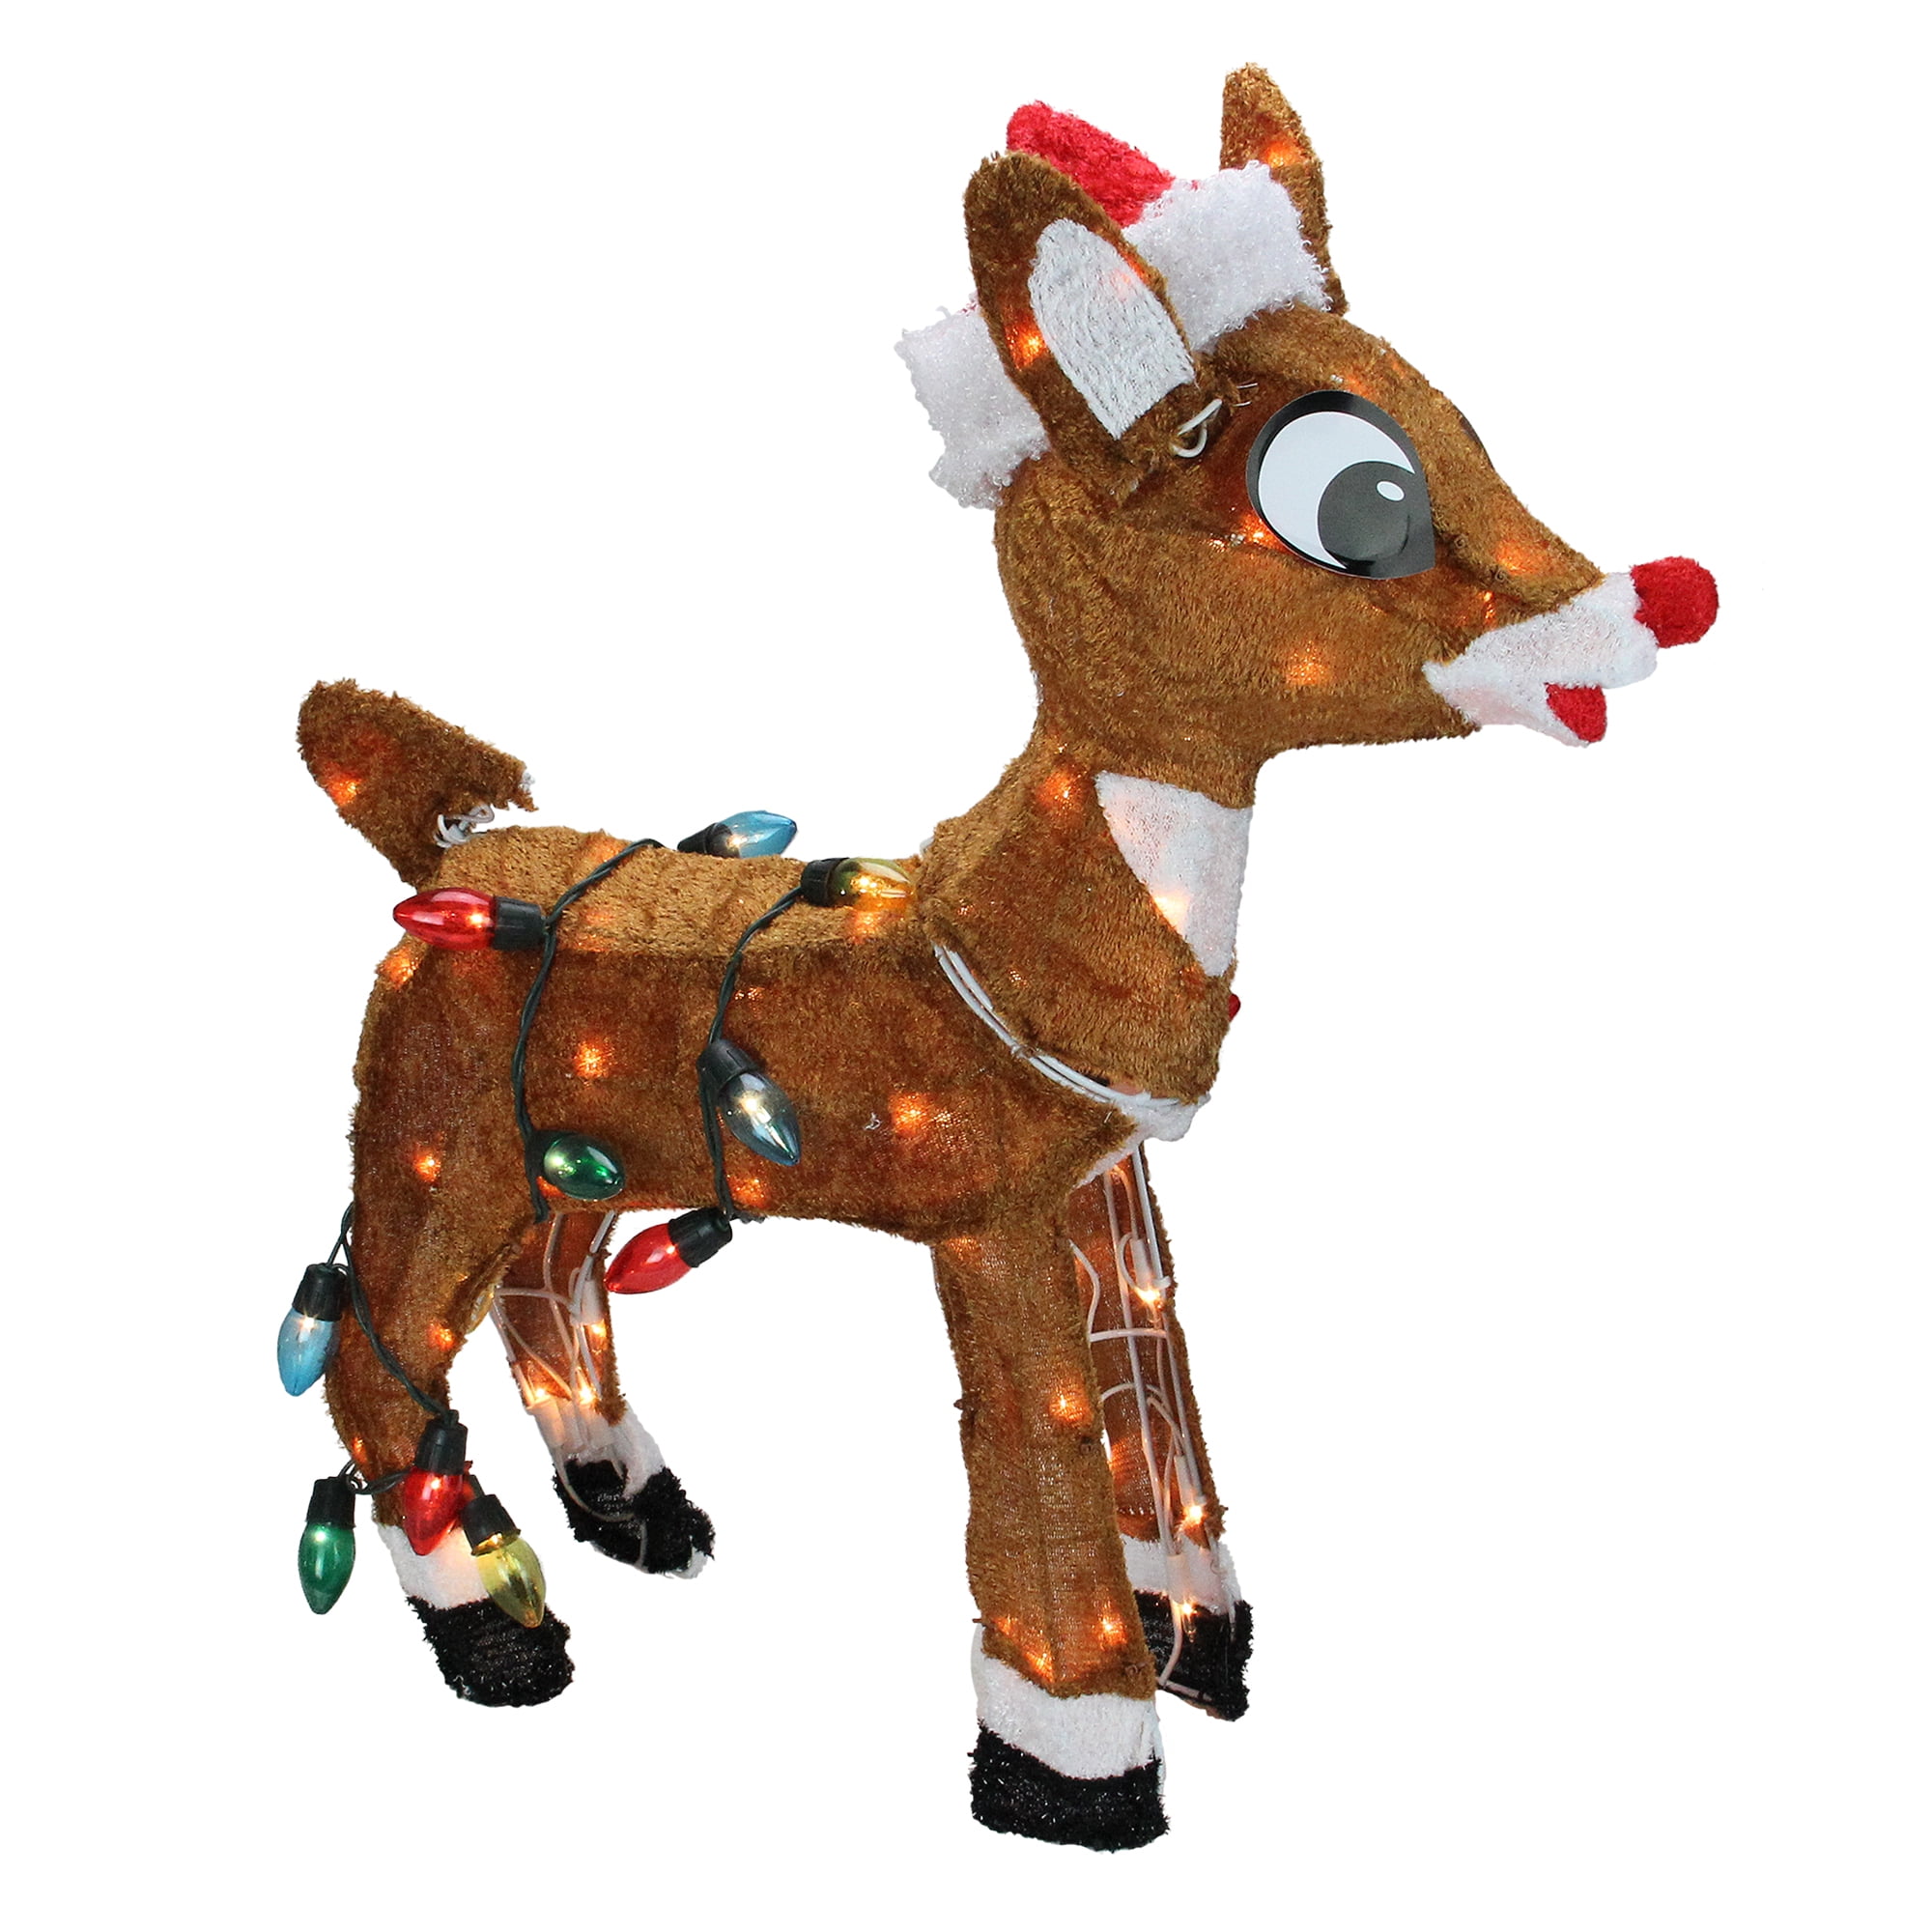 Creative Reindeer Christmas Decorations Ideas in 2022